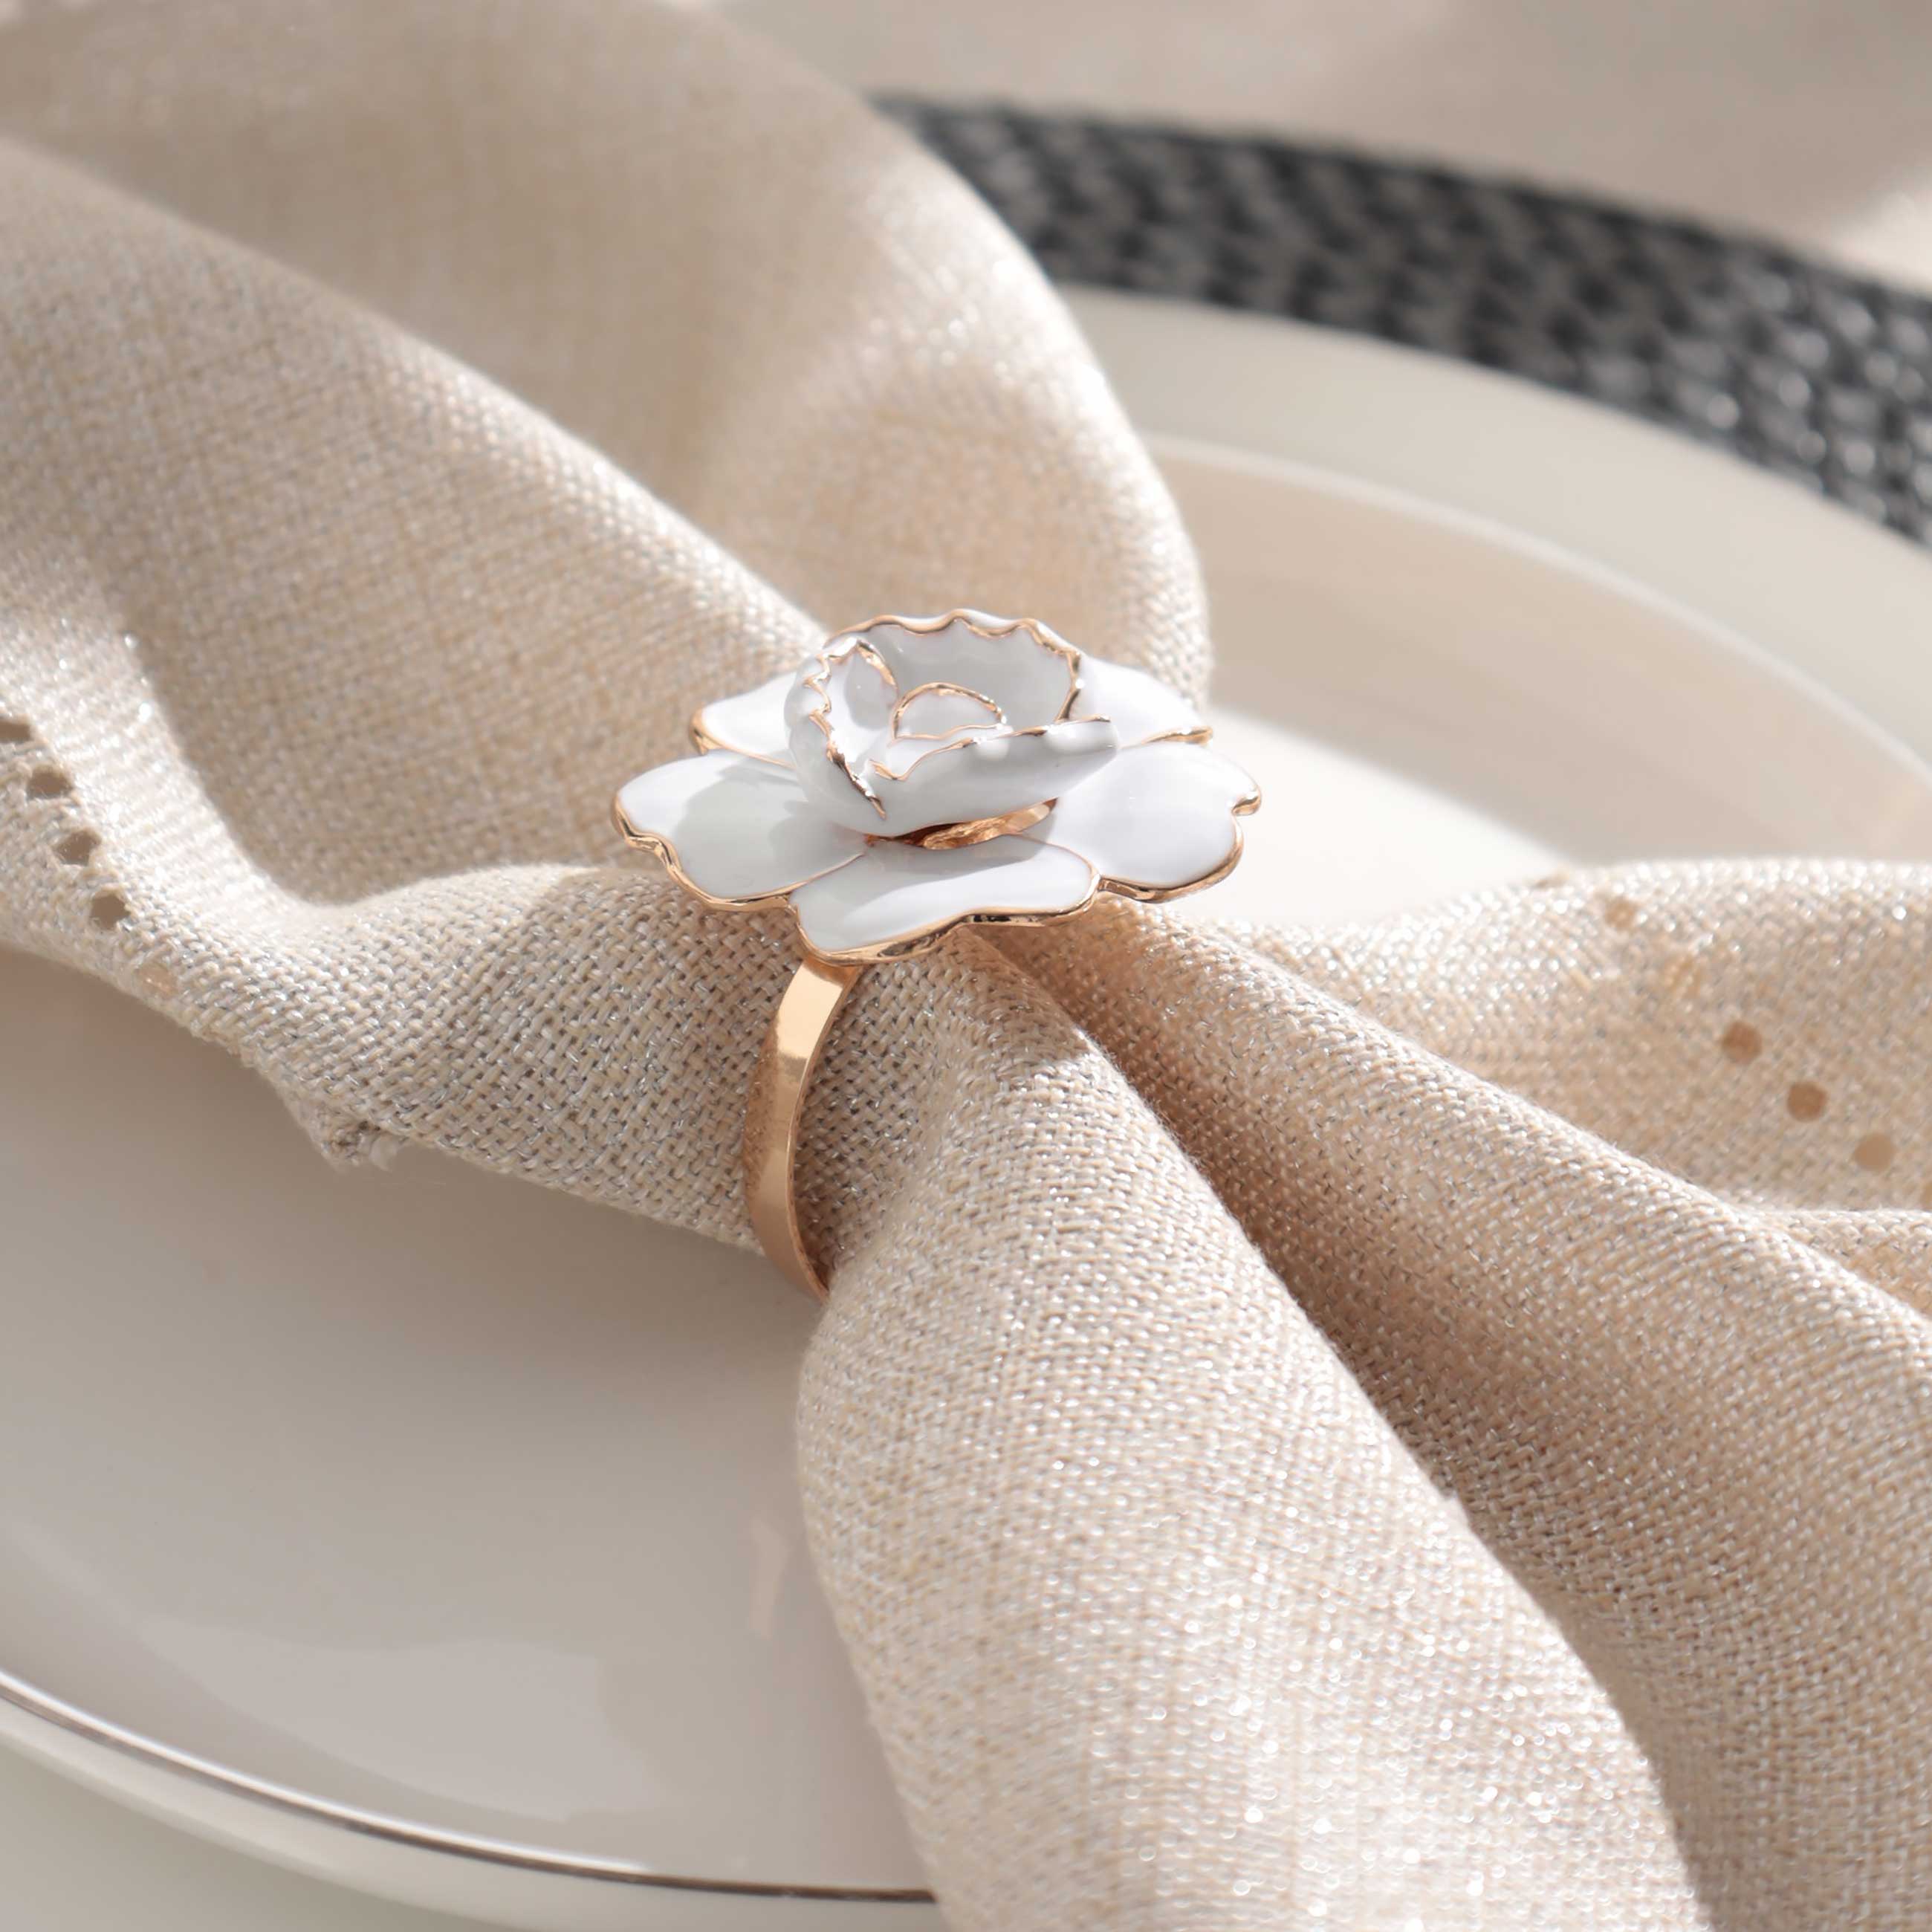 Napkin ring, 5 cm, metal, white and gold, Magnolia flower, Magnolia изображение № 3